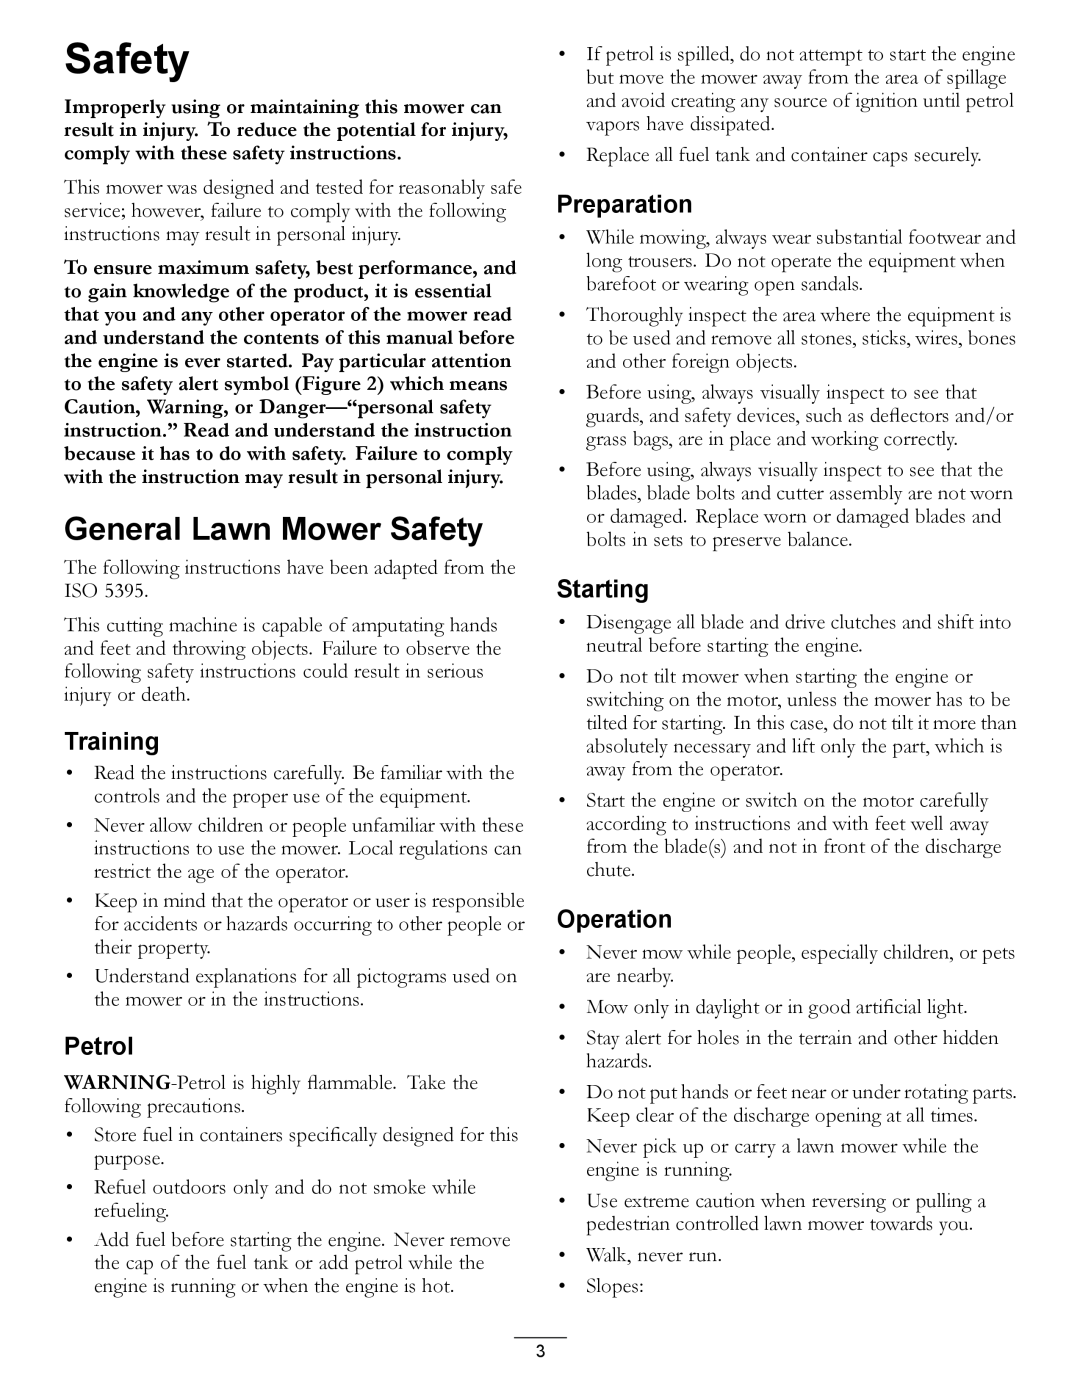 Hayter Mowers 447F manual General Lawn Mower Safety, Training, Petrol, Preparation, Starting, Operation 